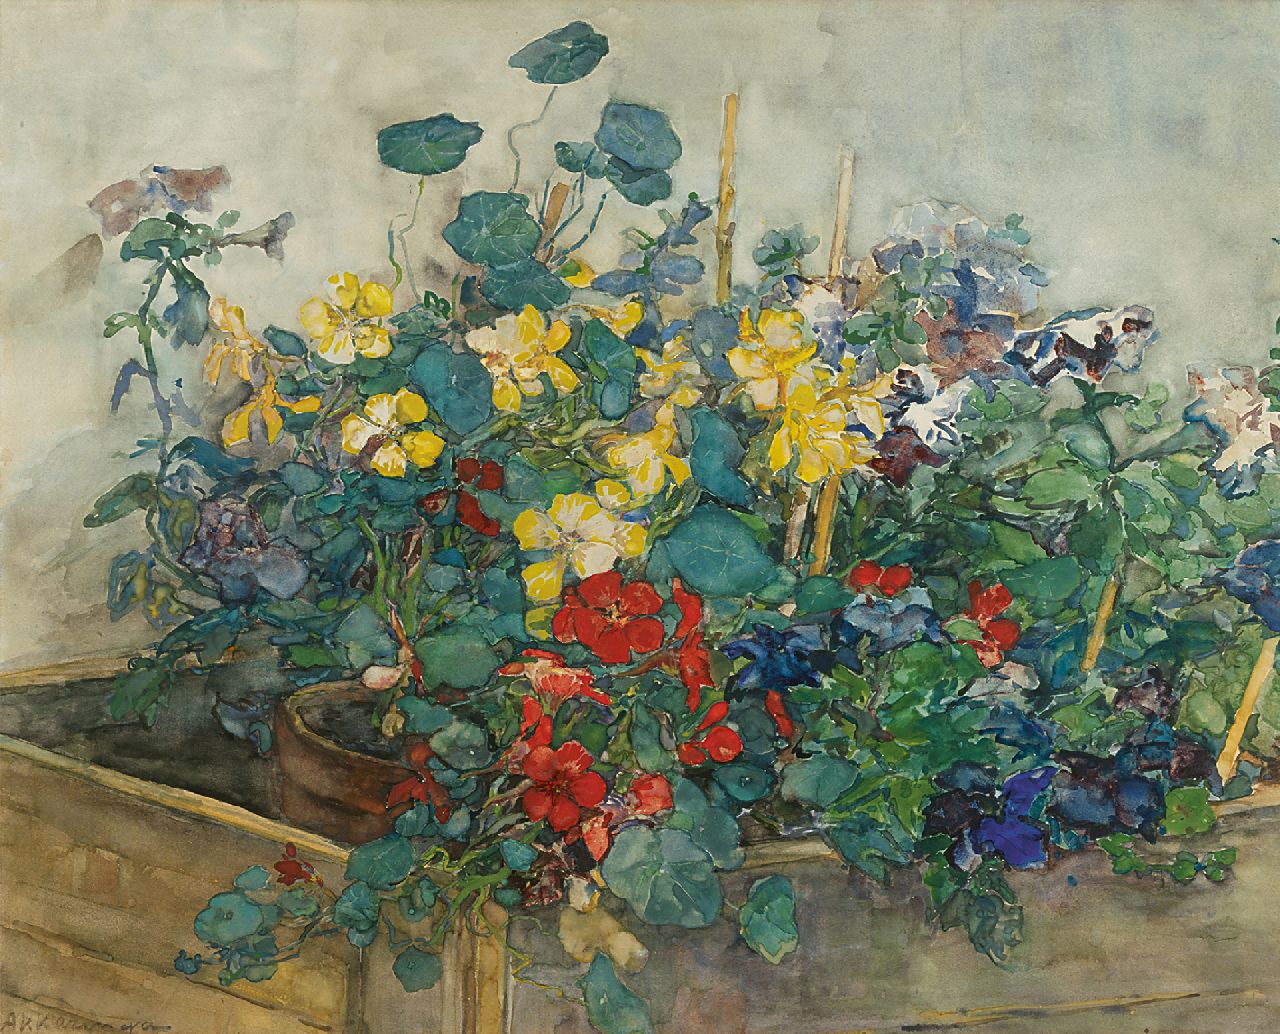 Akkeringa J.E.H.  | 'Johannes Evert' Hendrik Akkeringa, Sommerblumen, Aquarell und Gouache auf Papier 54,1 x 67,0 cm, Unterzeichnet l.u.